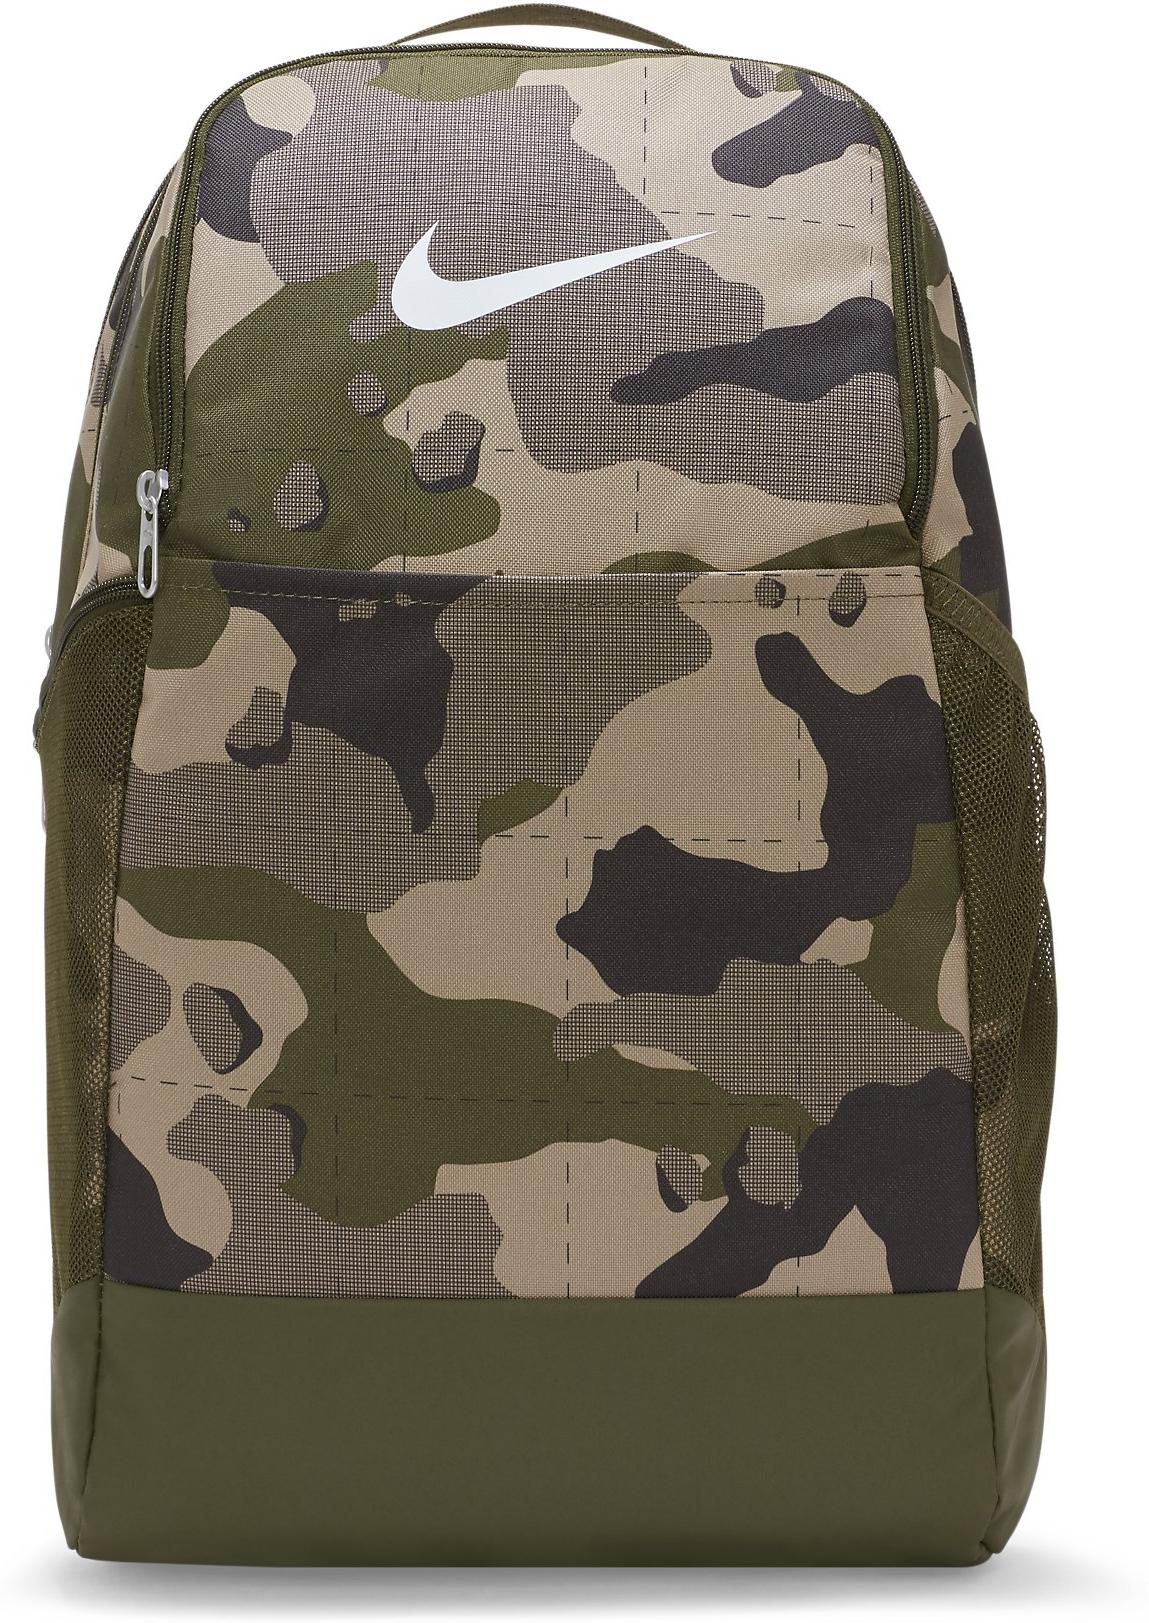 Rucsac Nike Brasilia Camo Training Backpack (Medium)